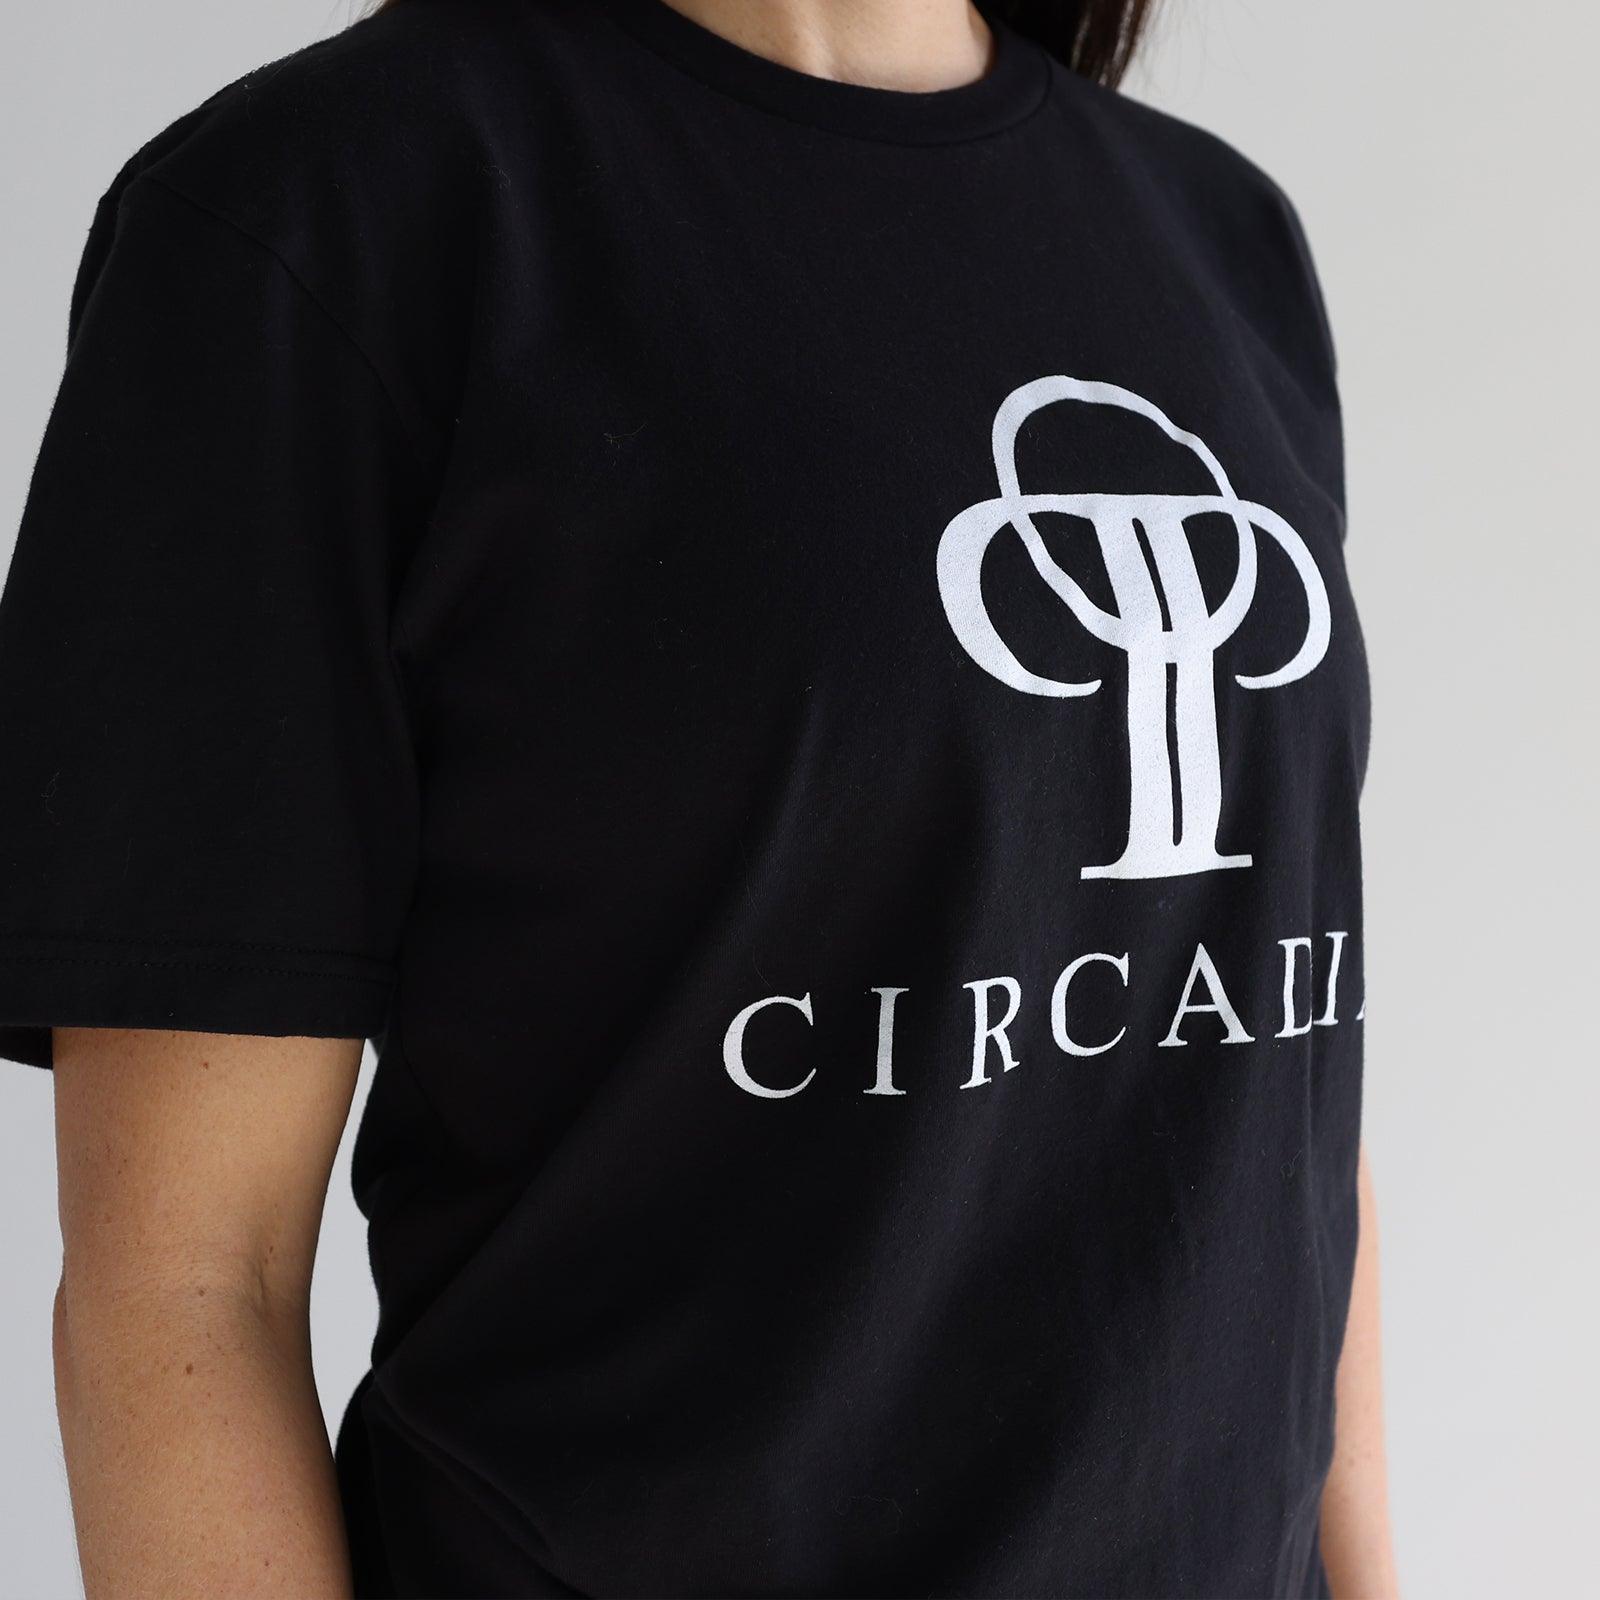 T-Shirt with Circadia Logo on front - CIRCADIA